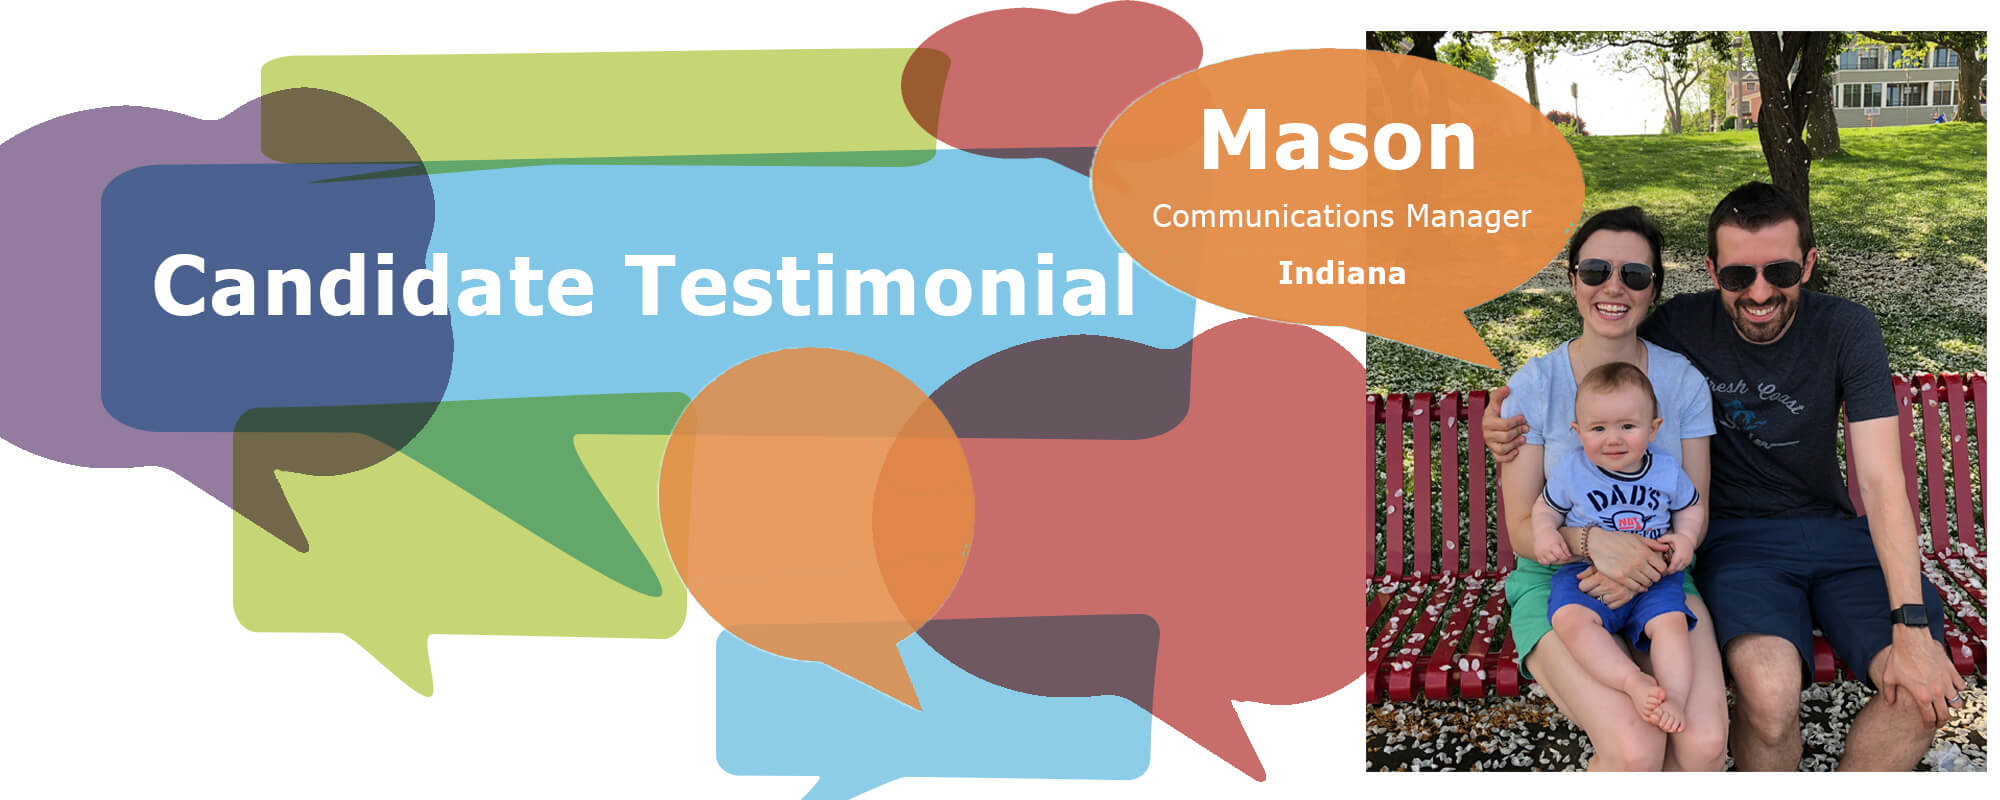 Candidate Testimonial: Mason N.